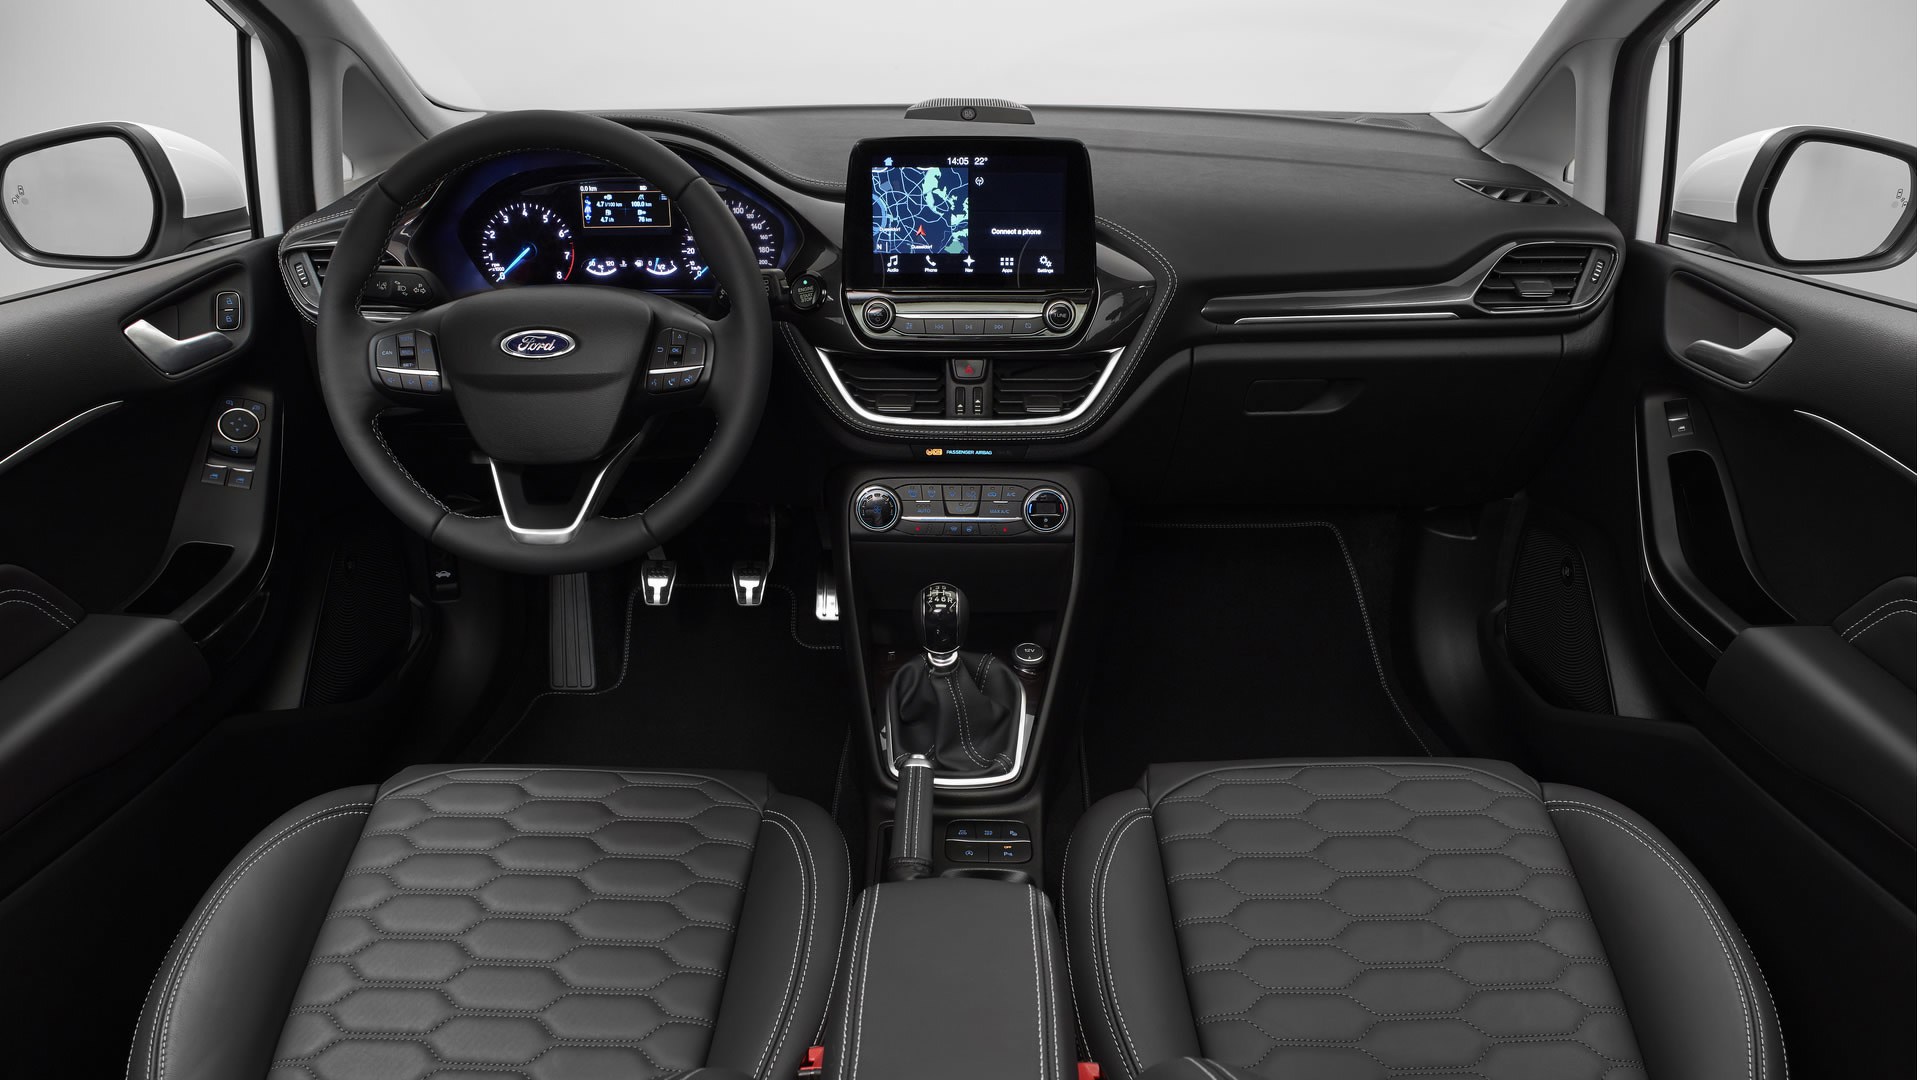 Novo Ford Fiesta 2018 - Interior